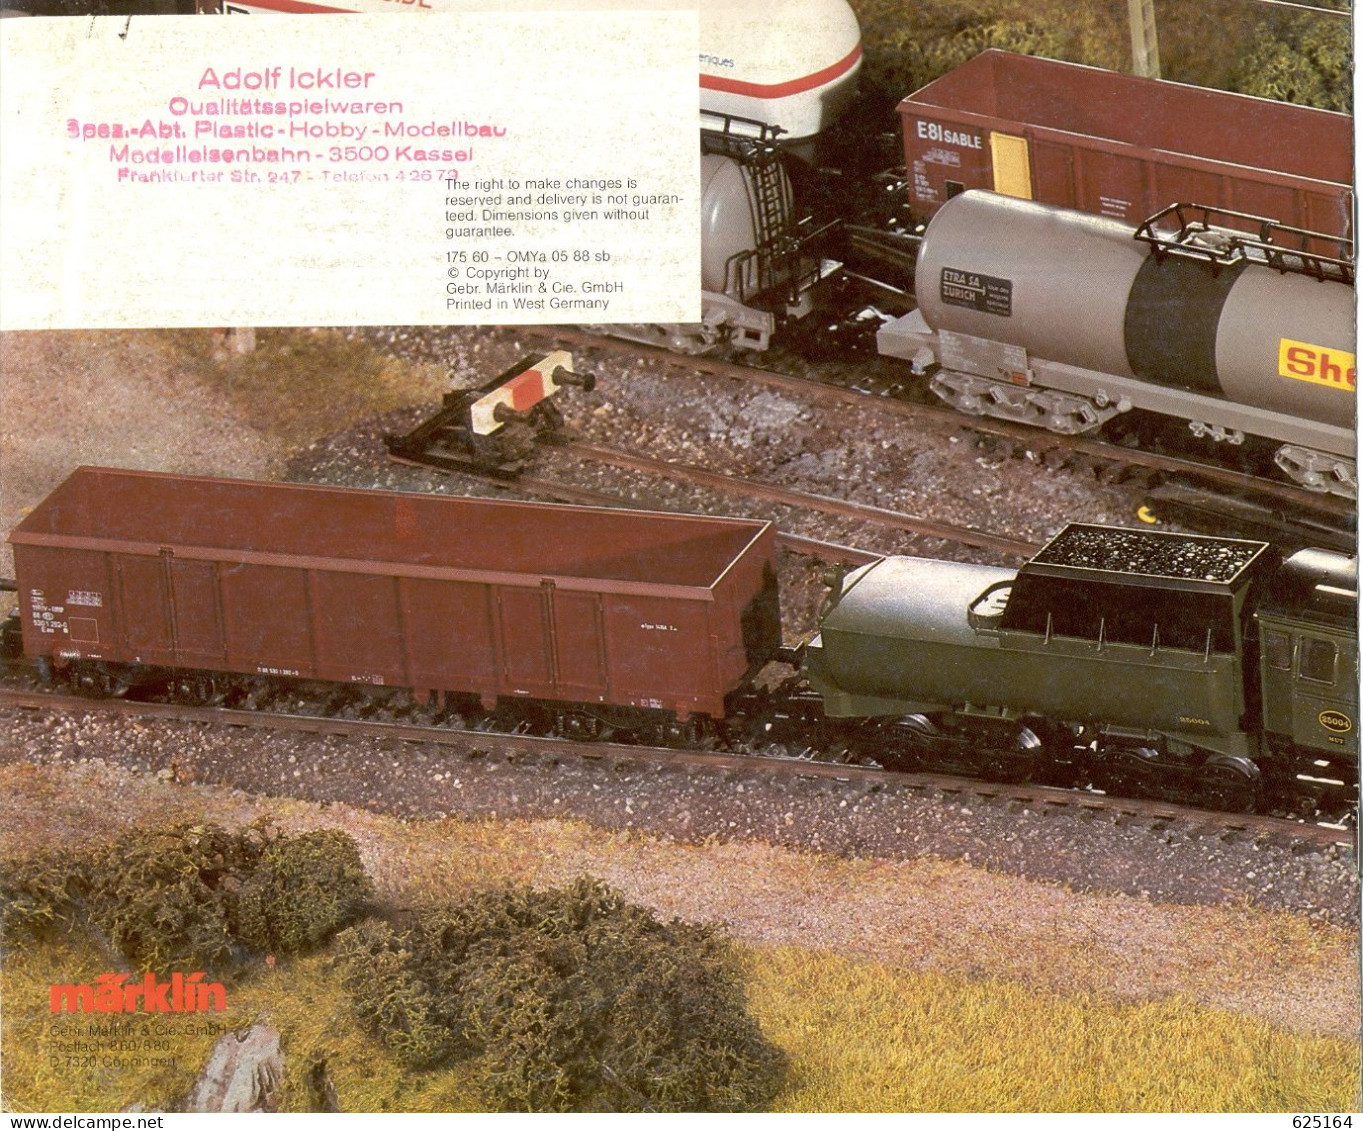 CatalogueMärklin 1988/89 Export Modelle Maquettes Exportation - En Allemand, Anglais Et Français - Französisch